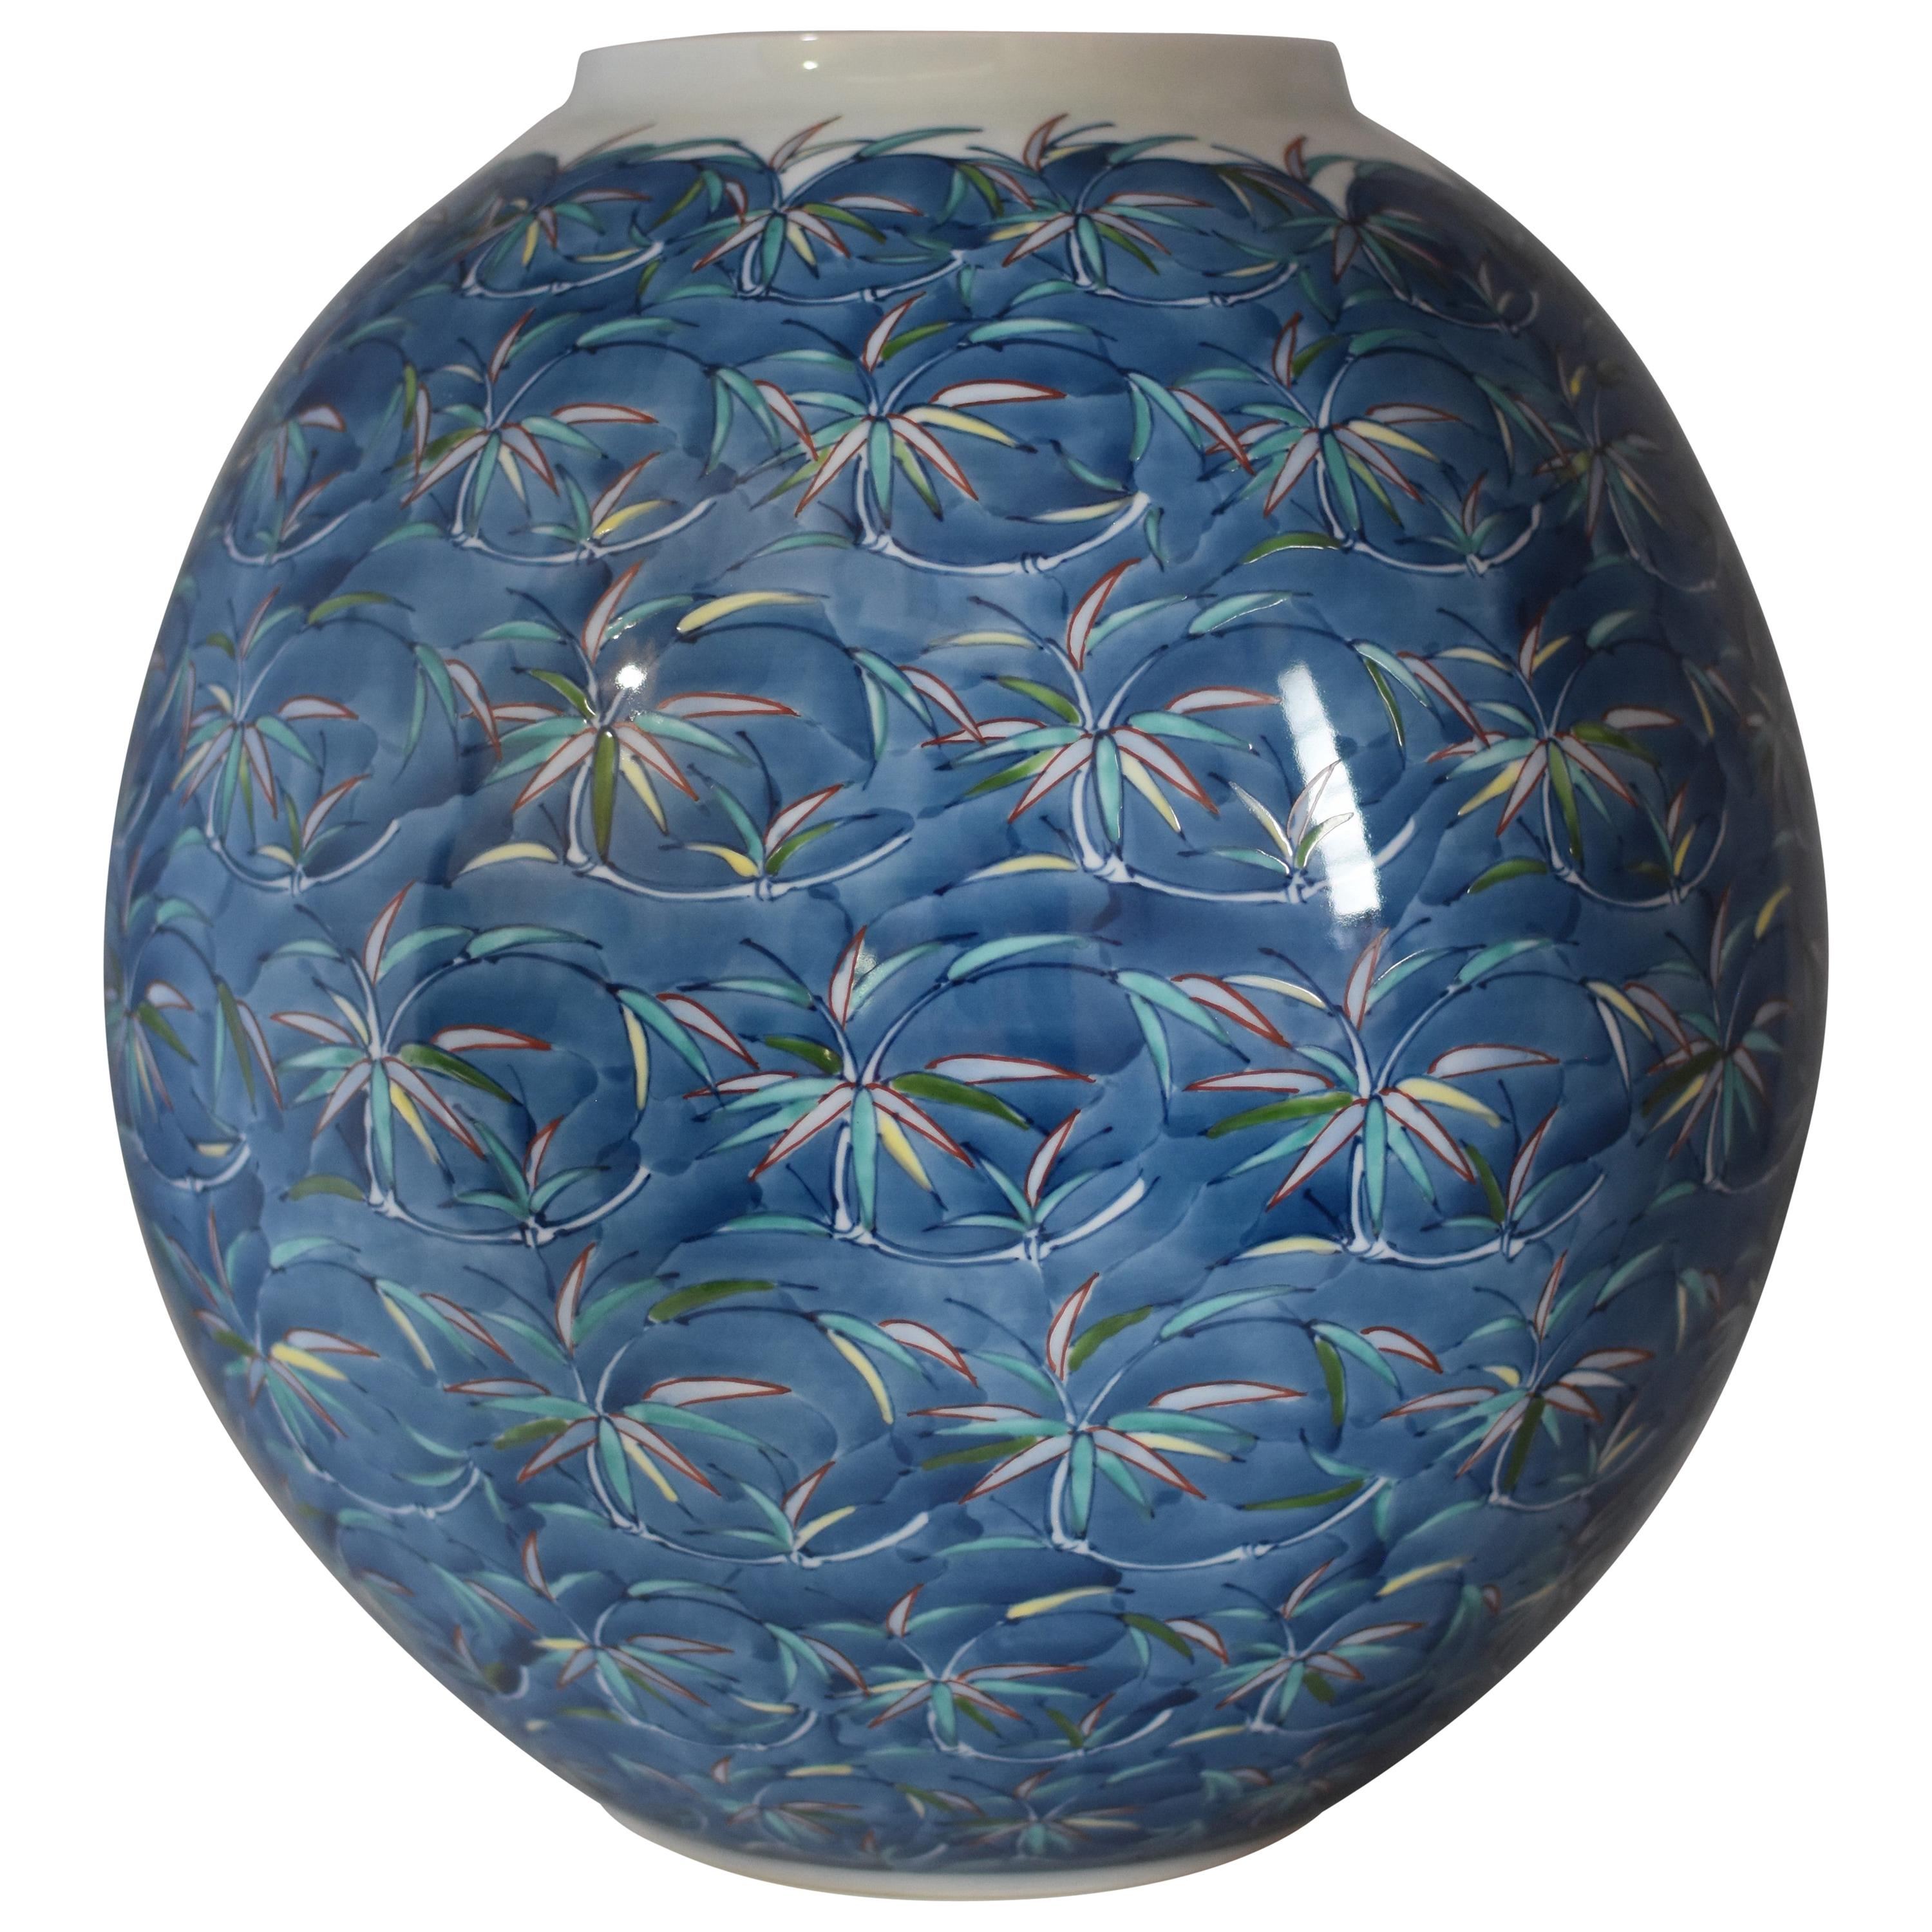 Japanese Contemporary Blue Green Imari Ceramic Vase by Master Artist